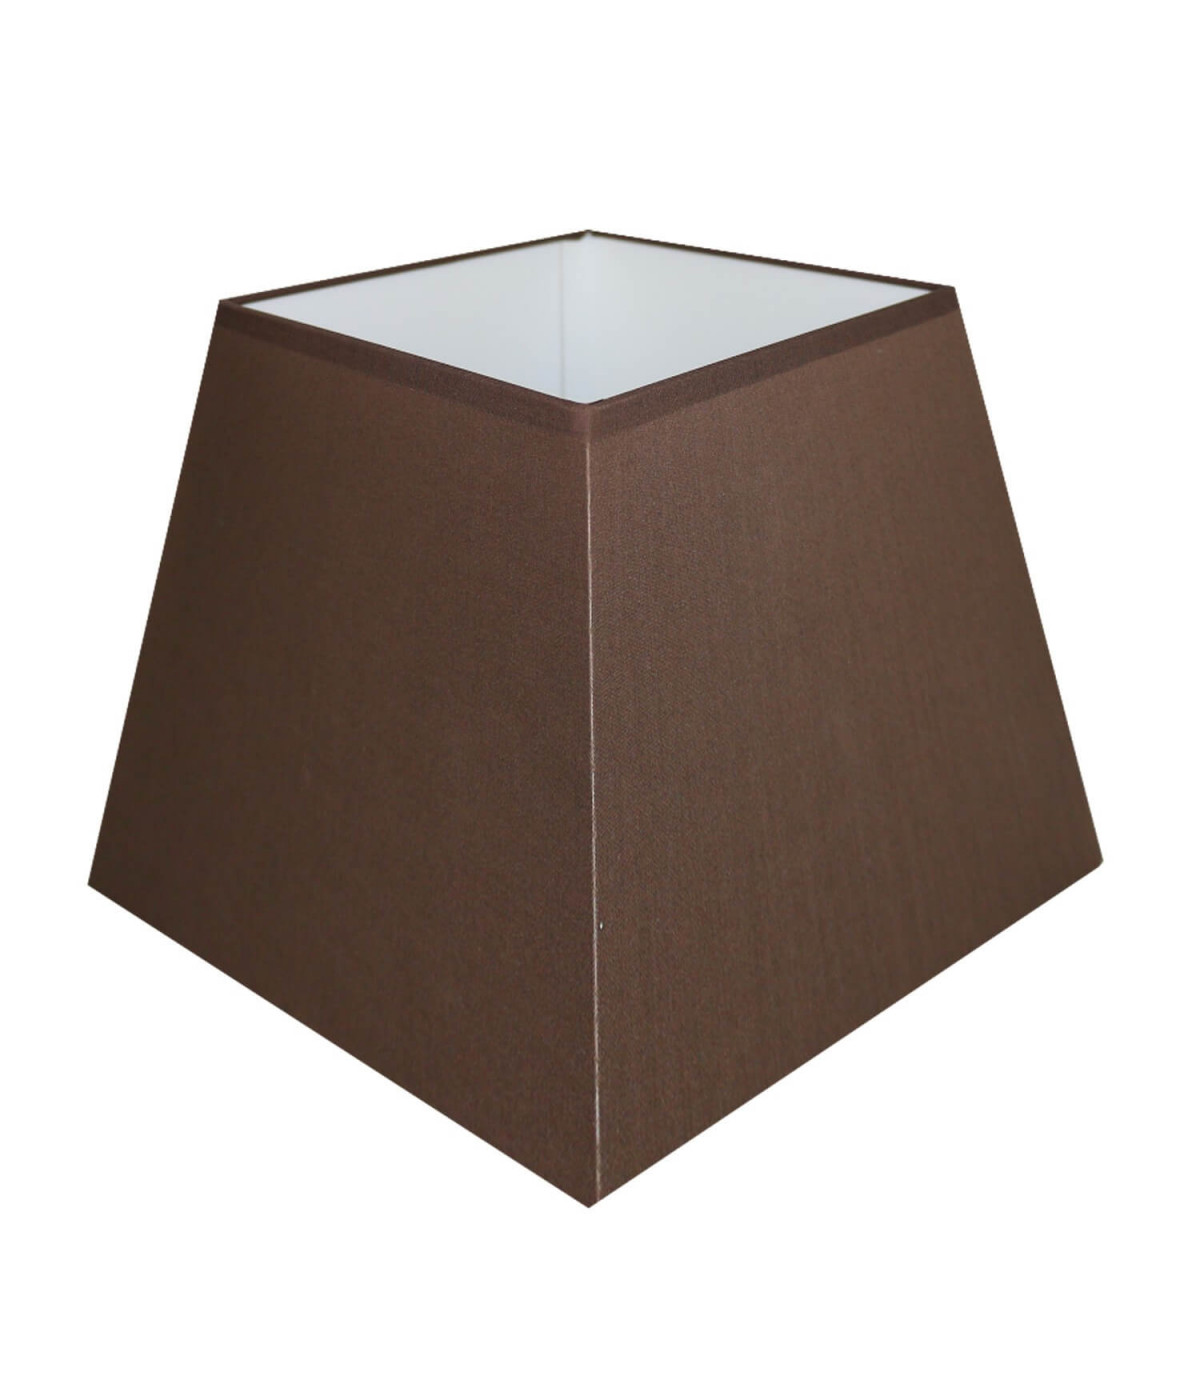 Chocolate pyramid square shade